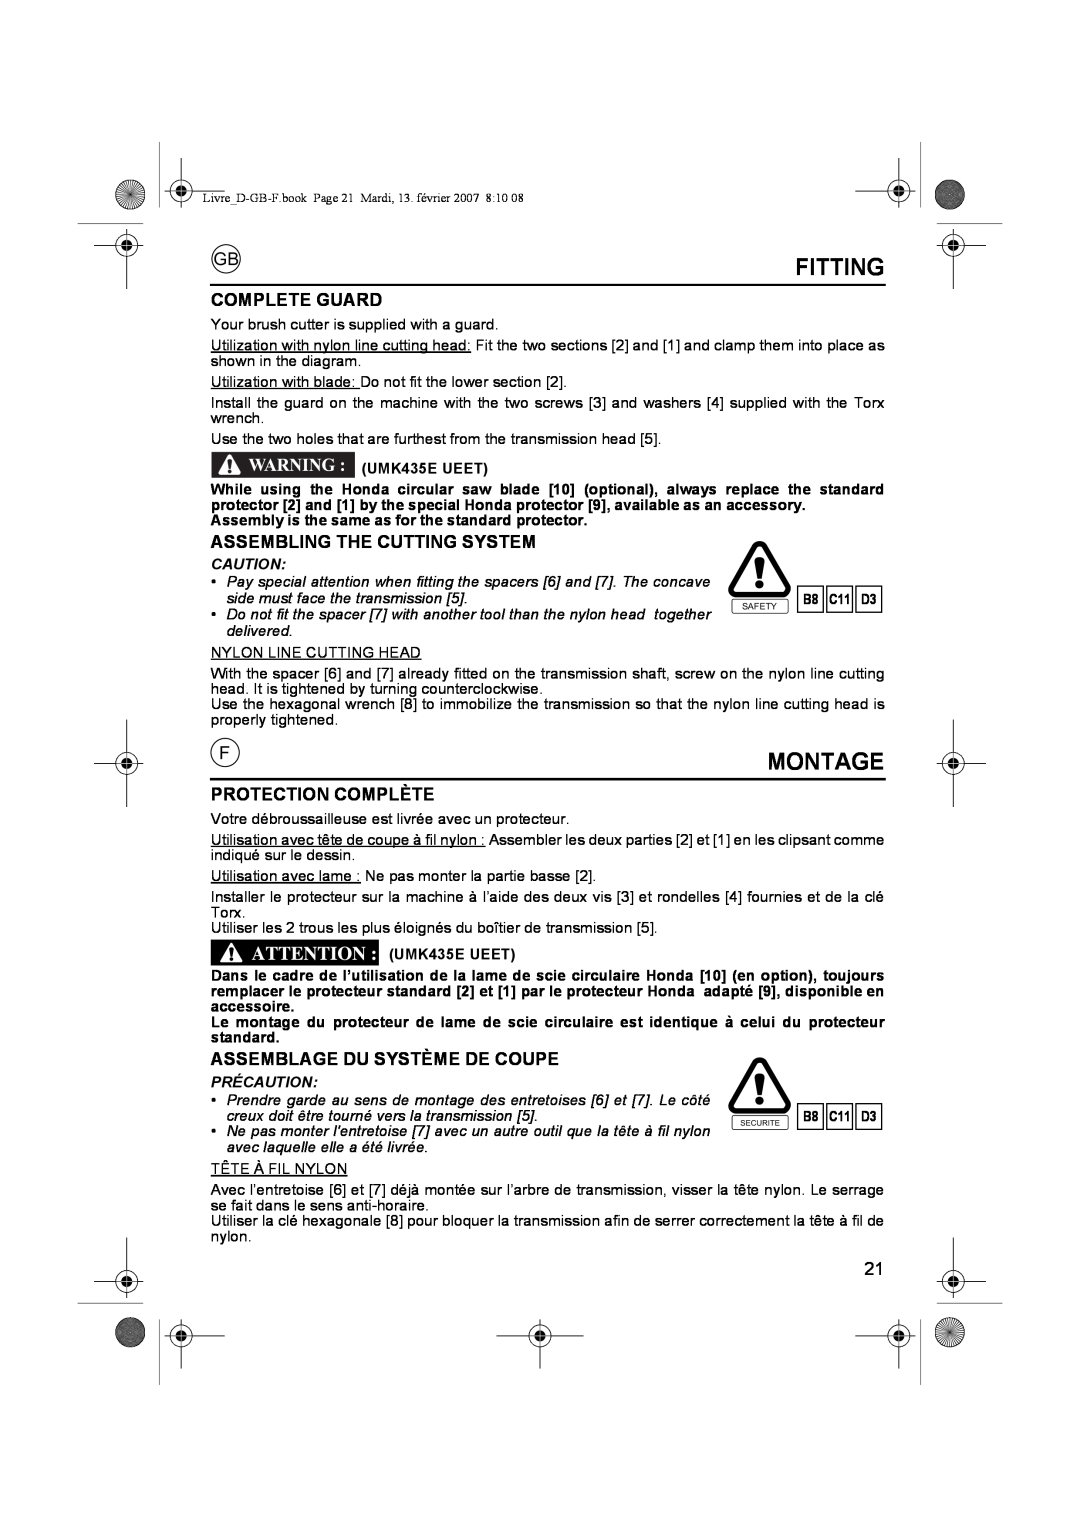 Honda Power Equipment owner manual Fitting, Montage, UMK435E UEET, B8 C11 D3 